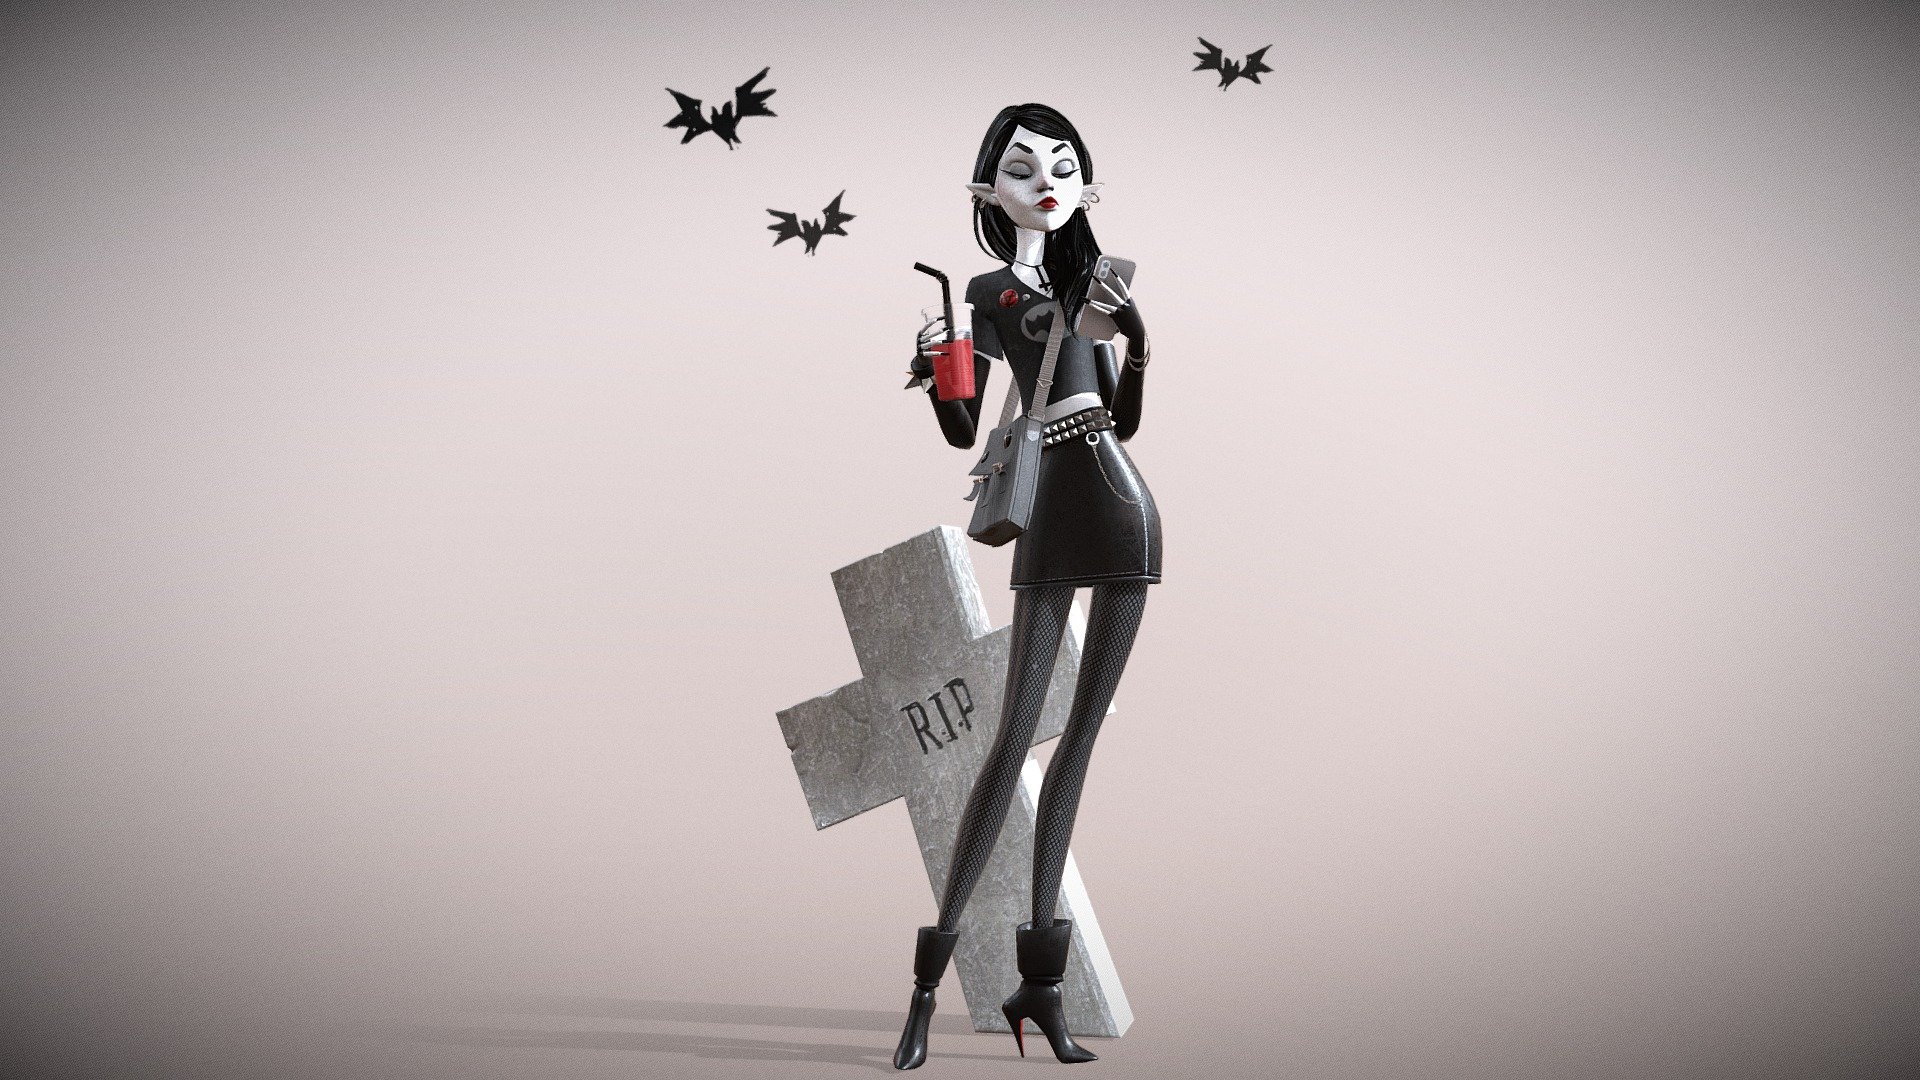 Vampire lady. Original concept by Serge Birault
Full renders: https://www.artstation.com/artwork/Le5vKR - Vampire Lady - 3D model by bandinopla (@pablobandinopla) 3d model